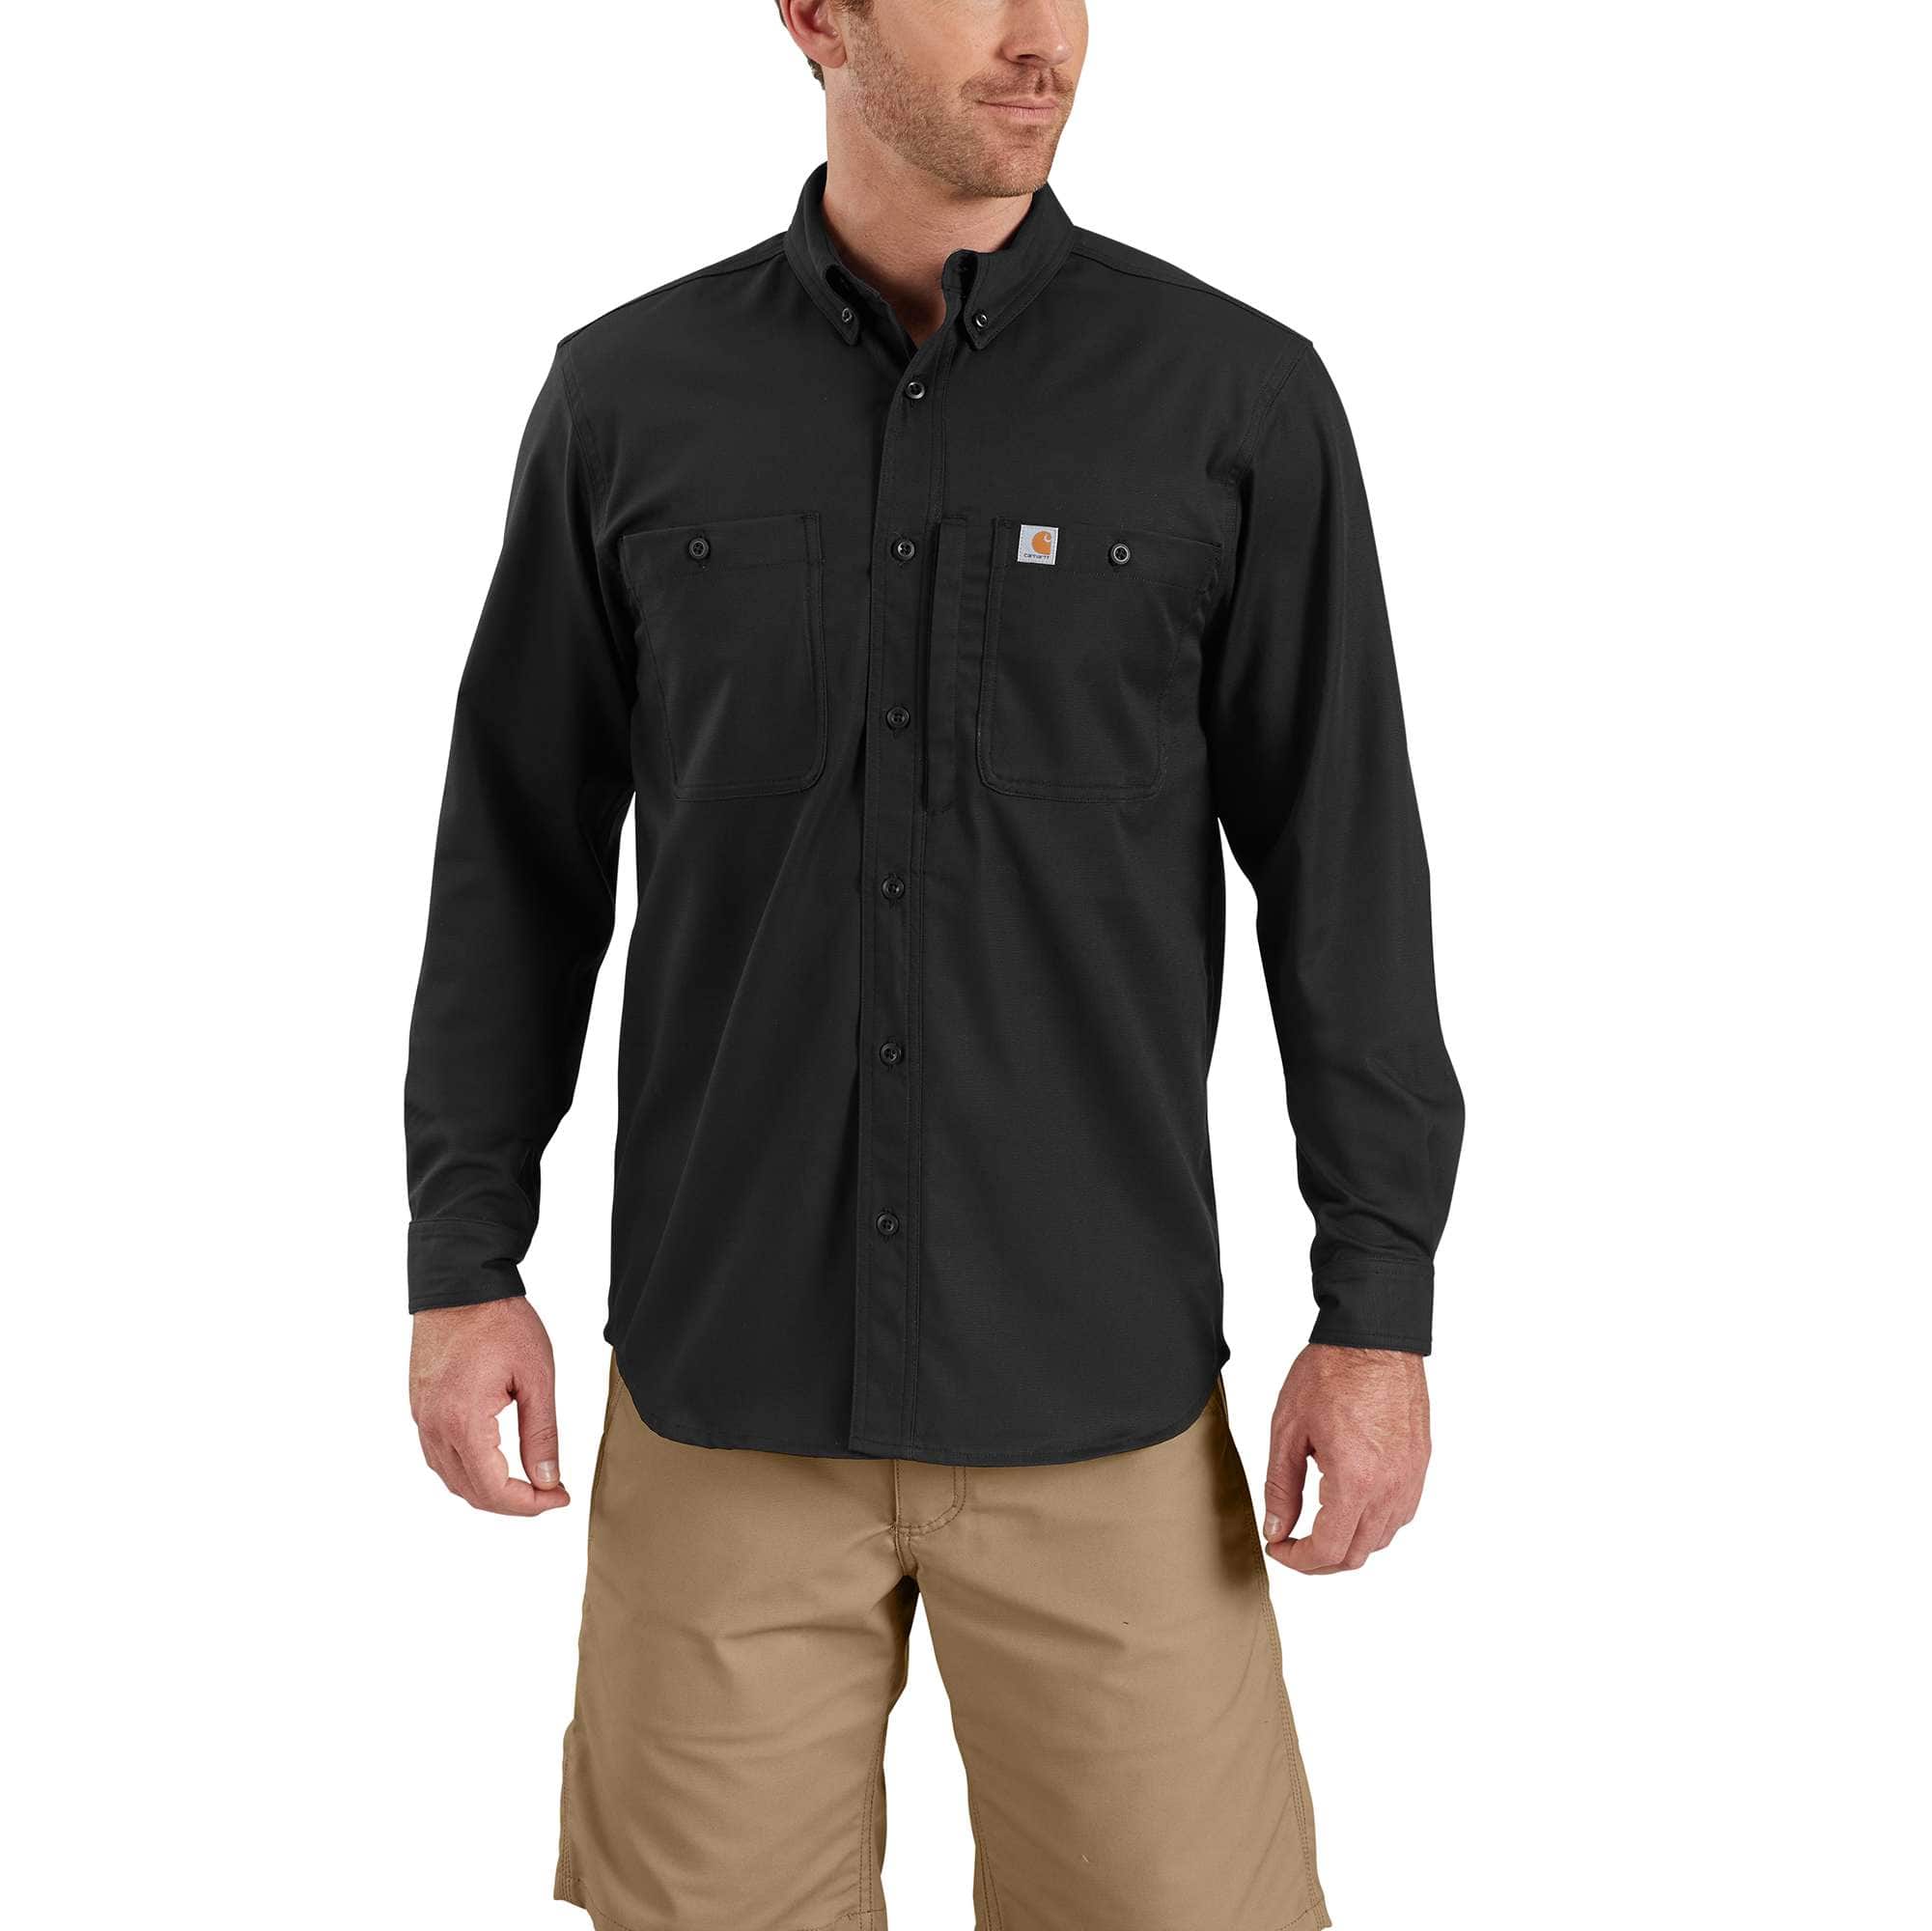 Men's Uniform Shirts | Carhartt Company Gear